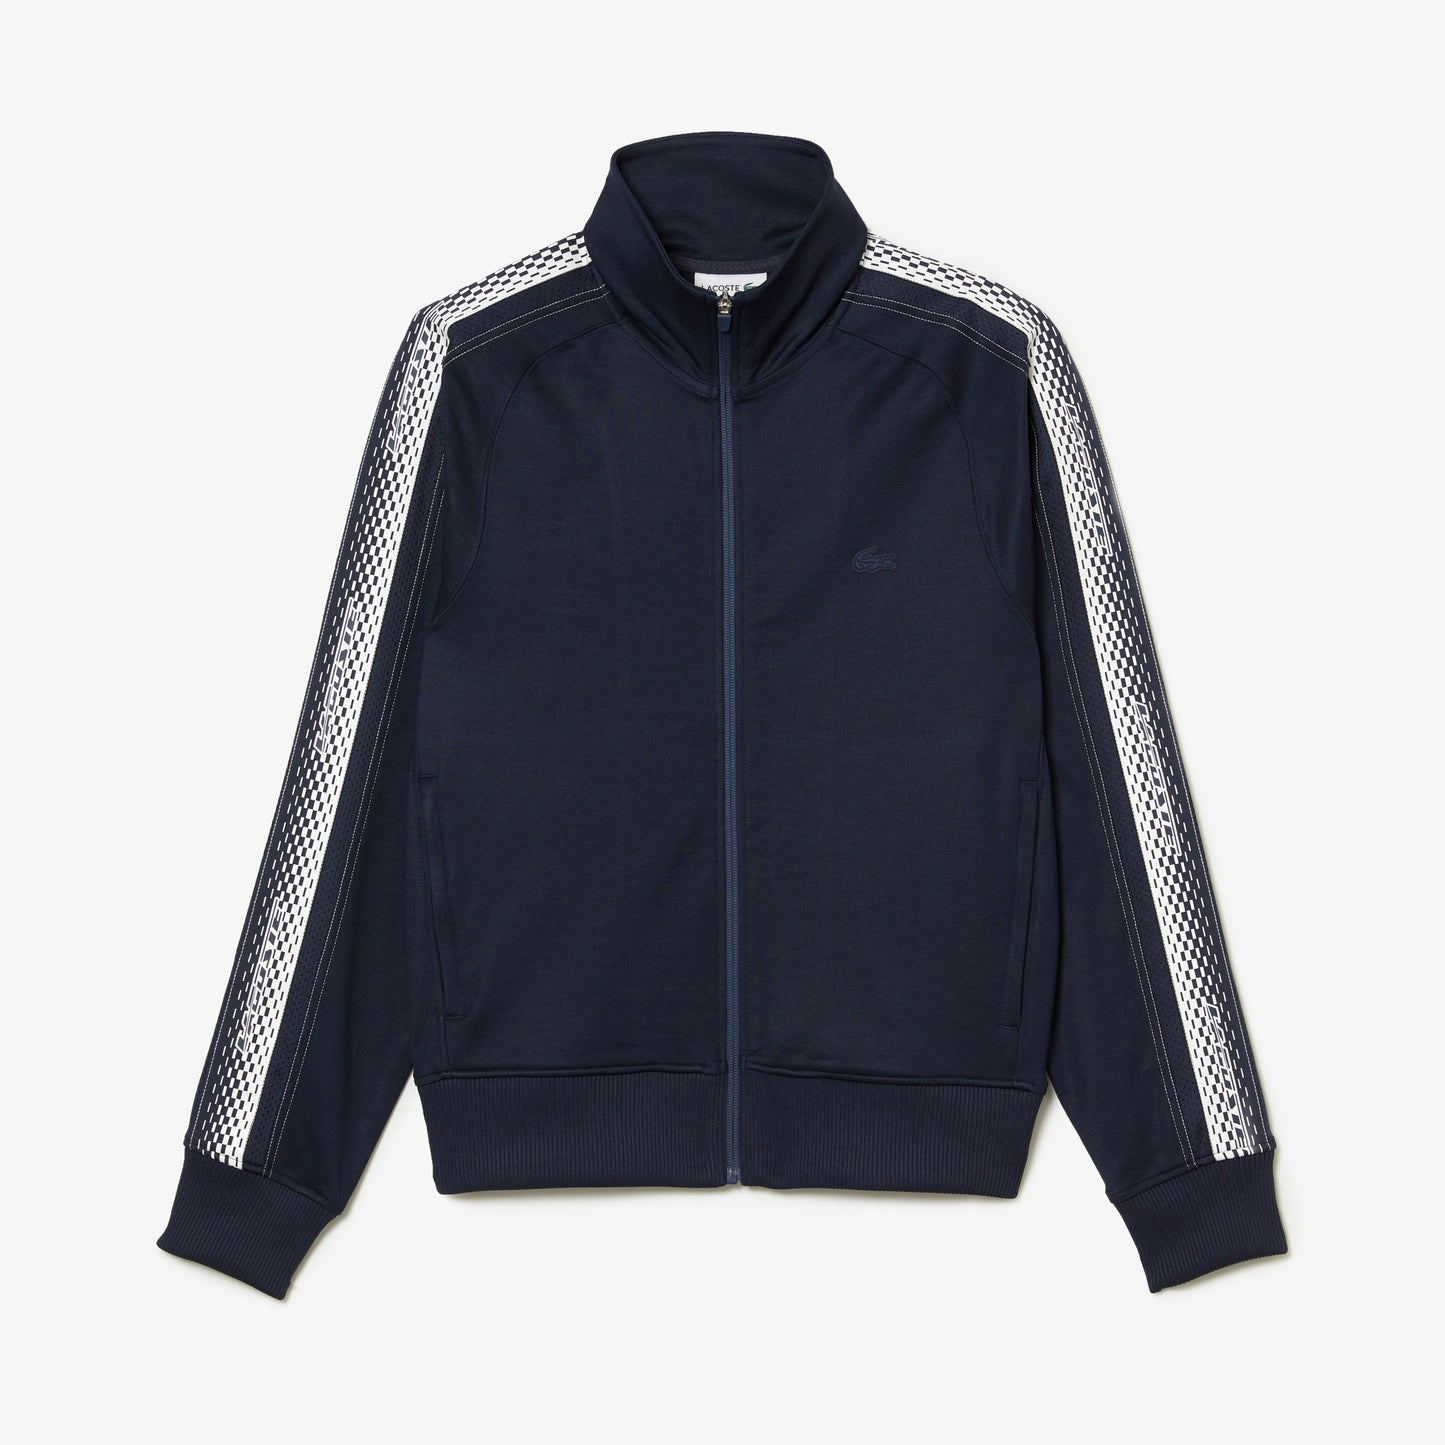 Men’s Lacoste Regular Fit Zipped Piqué Sweatshirt - SH5365